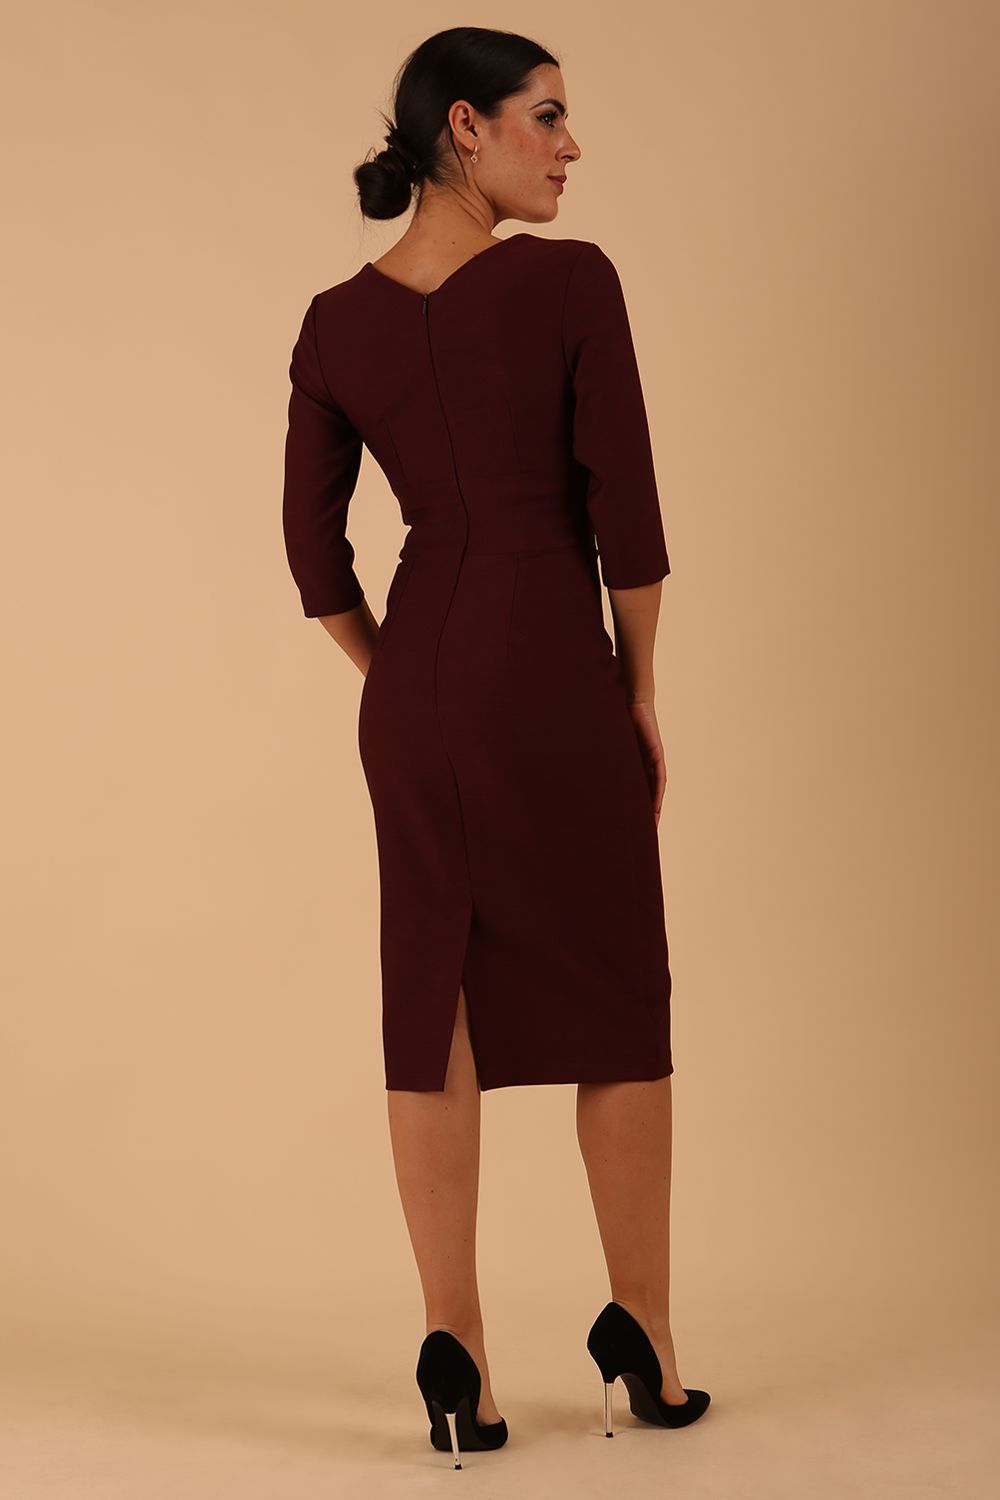 Model wearing diva catwalk Seed Divine Dress 3/4 sleeved knee length in port royale colour